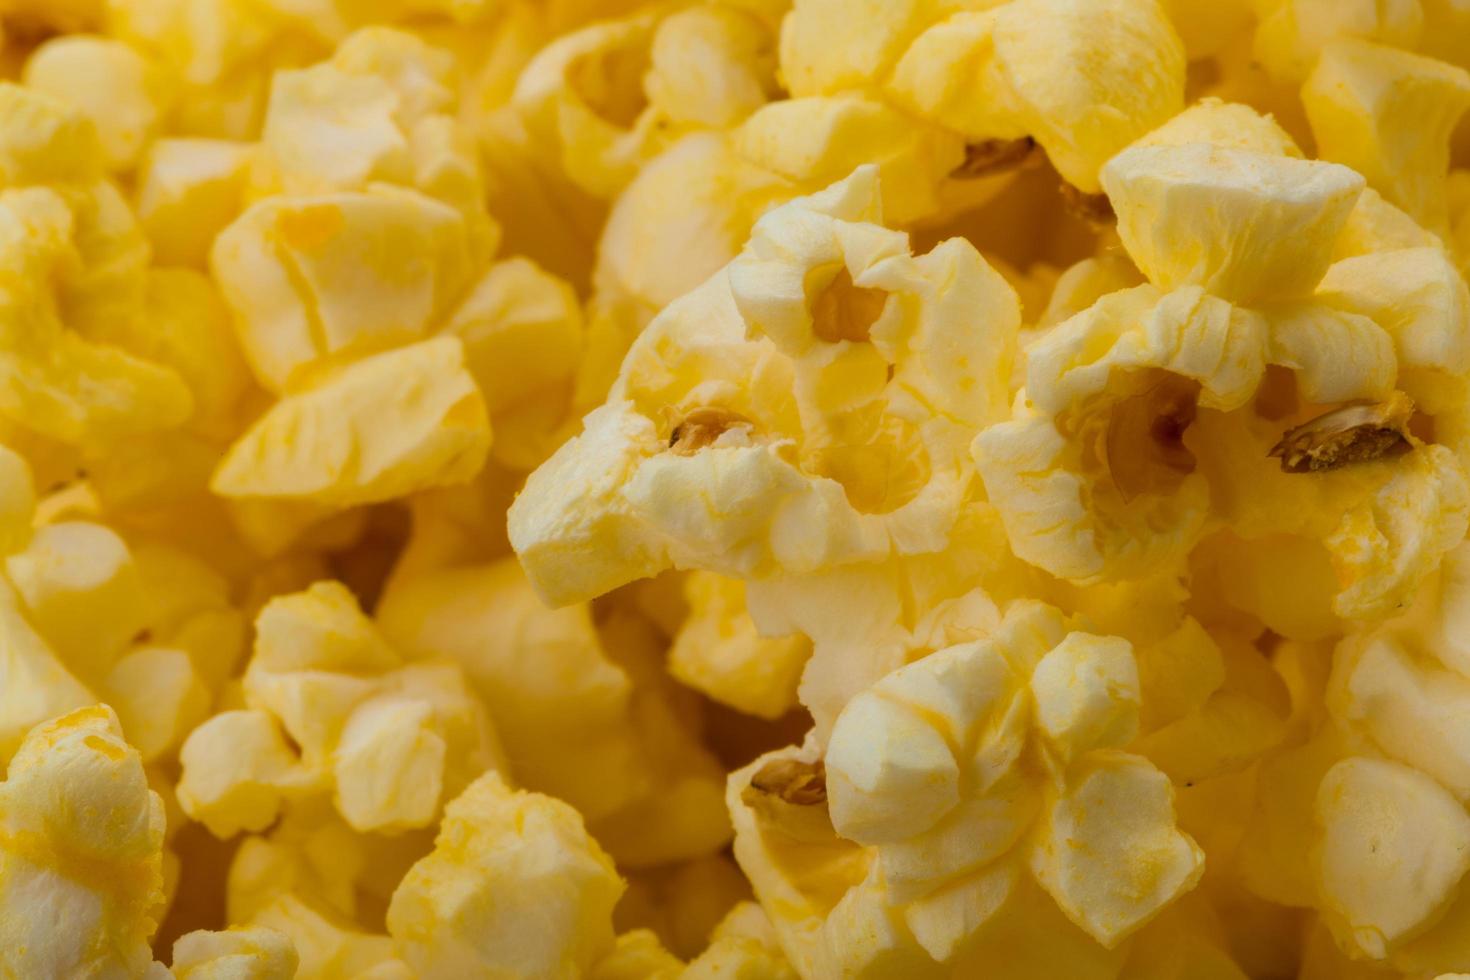 Popcorn close up view photo